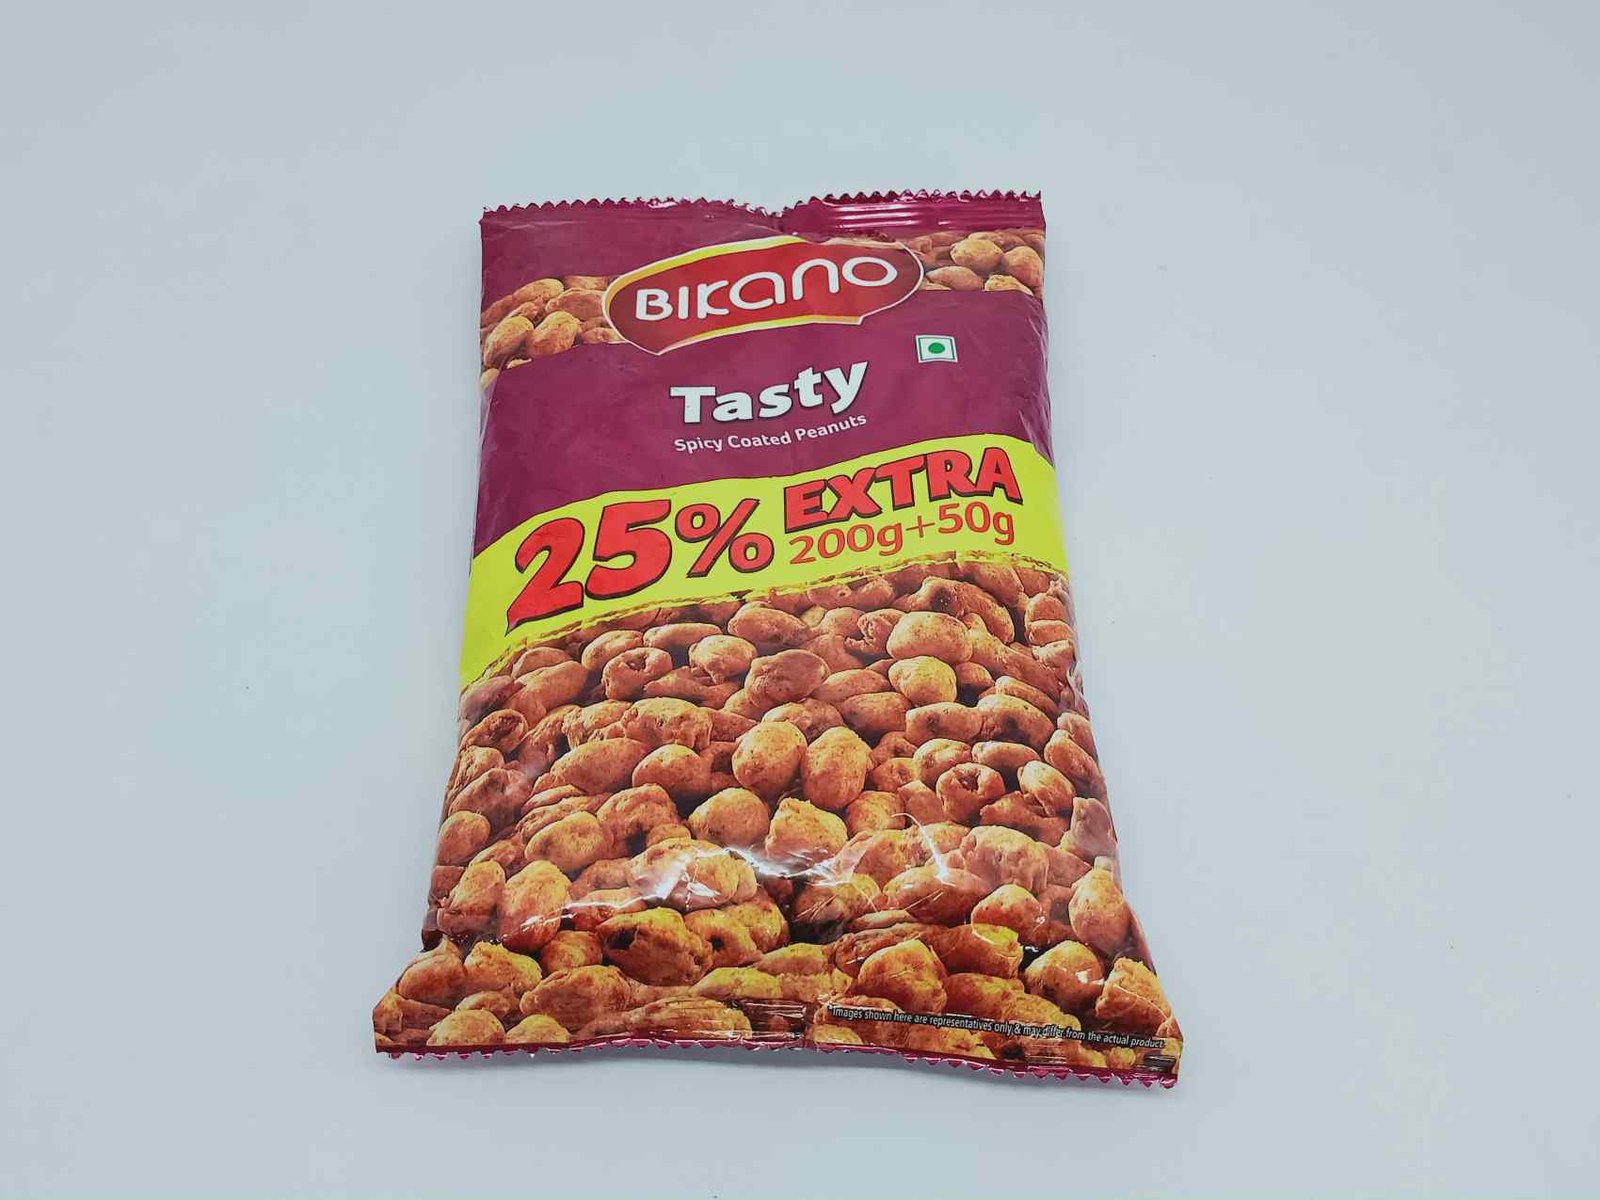 Bikano tasty spicy coated peanuts, 250 grams